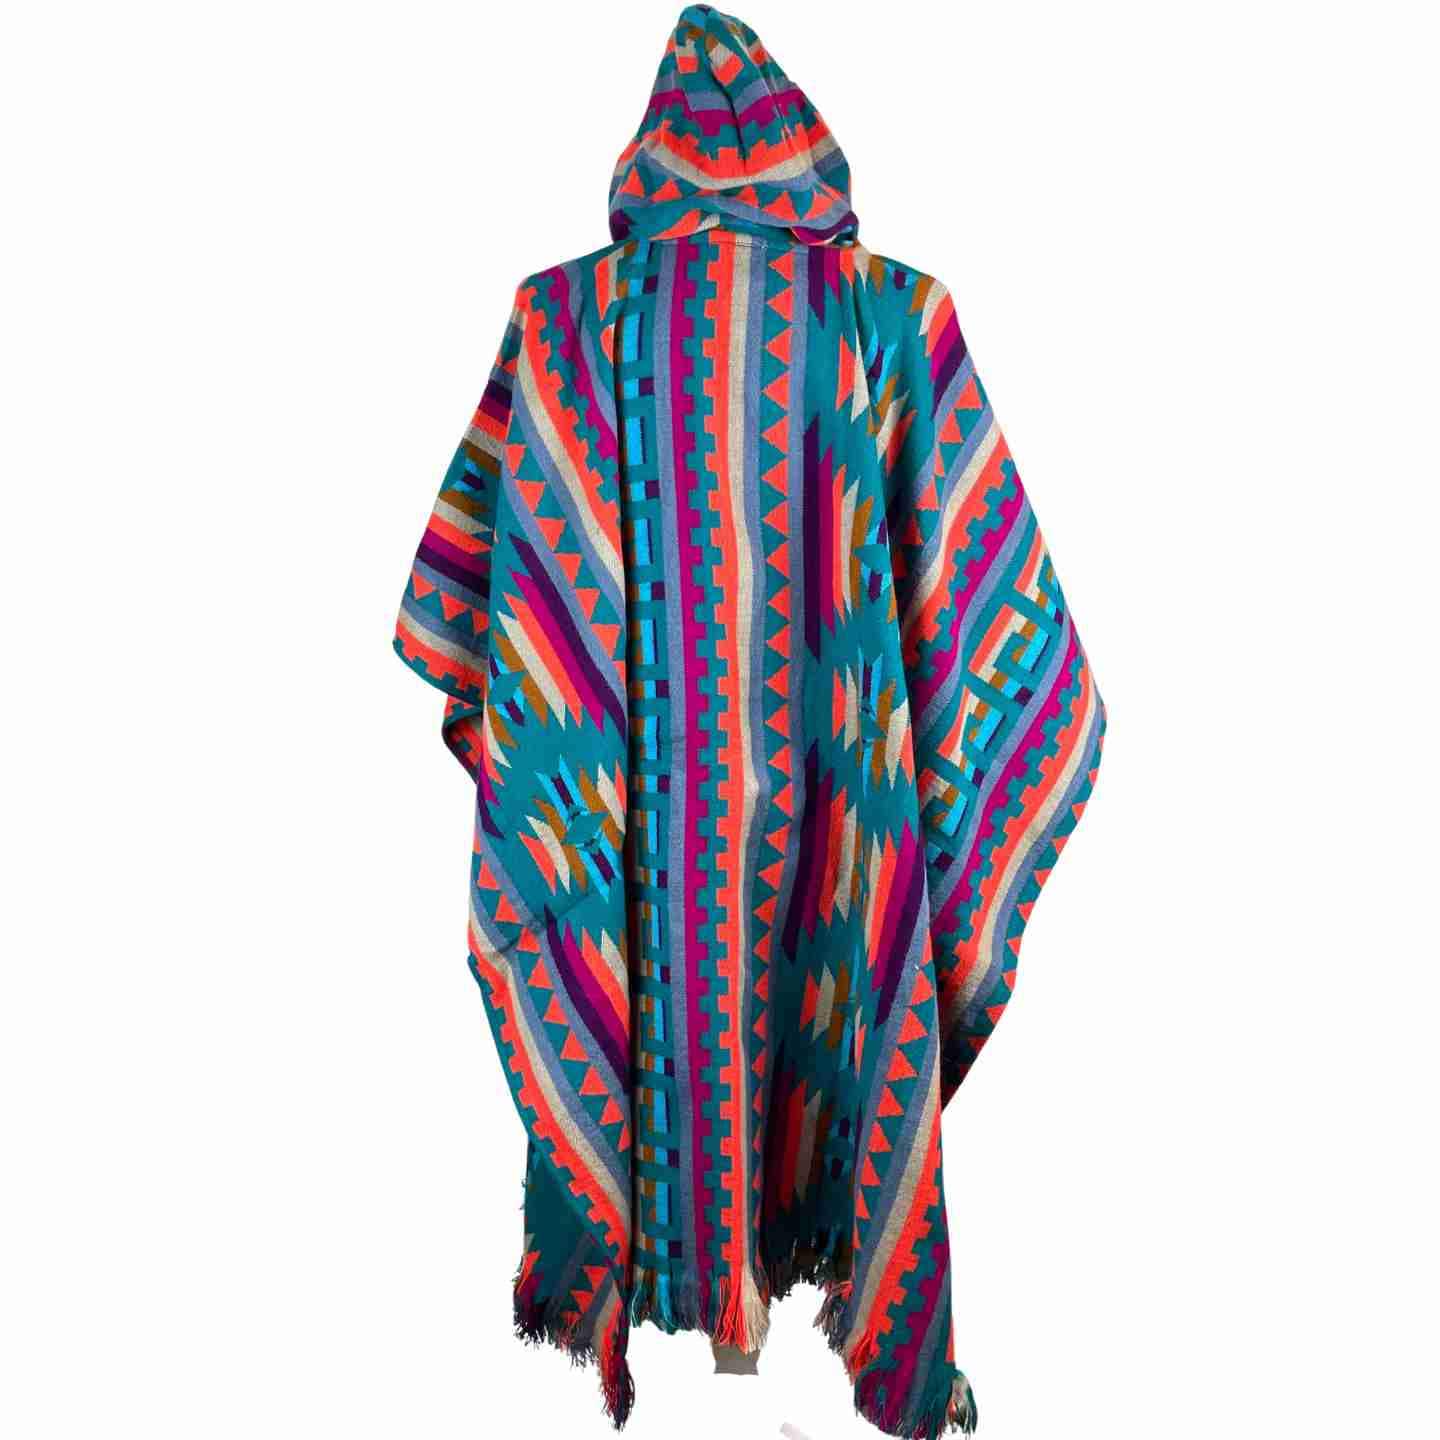 Stylish Hooded Poncho for Men - Rainbow Aqua Lake